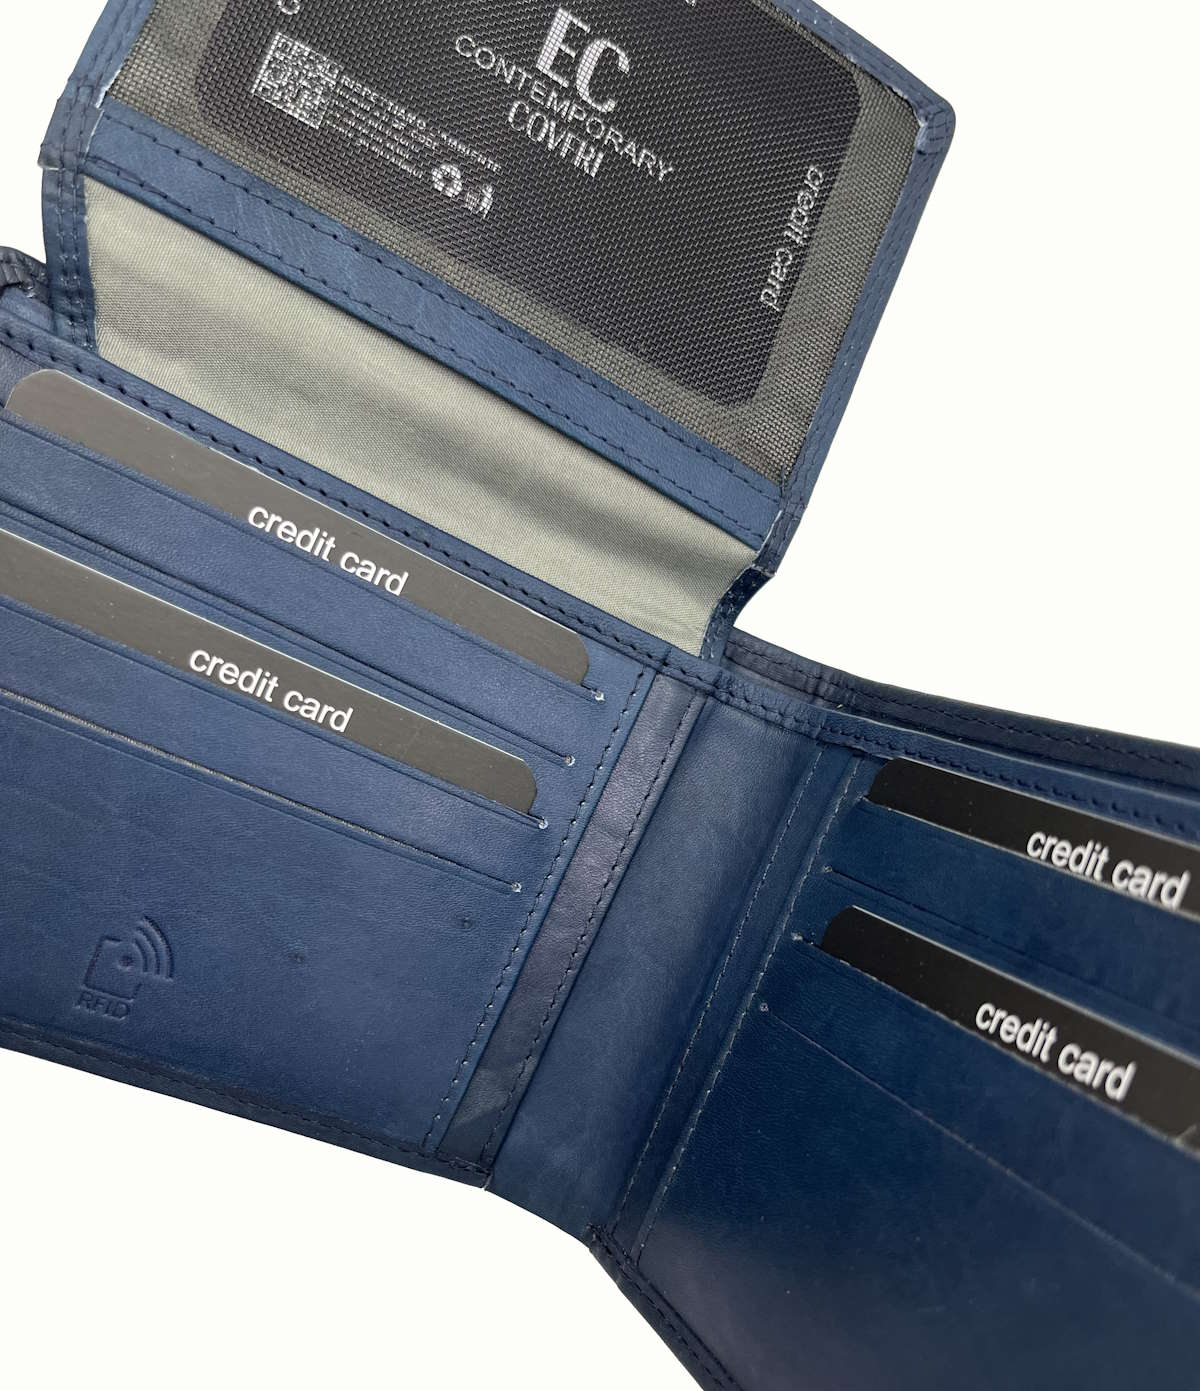 Genuine leather Wallet, Brand EC COVERI, art. EC23762-06